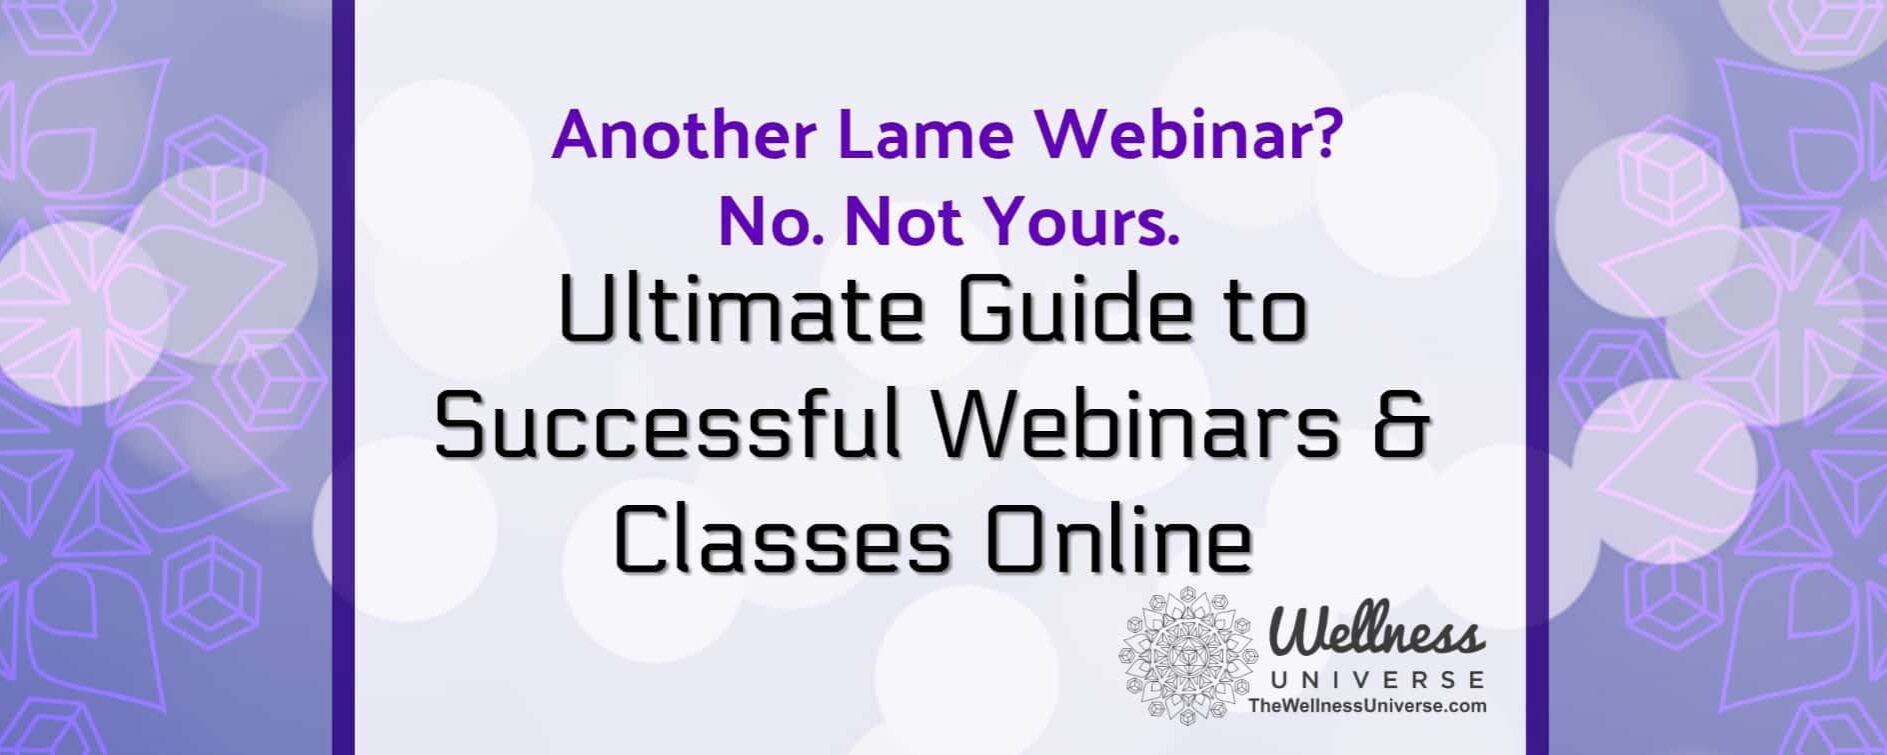 Ultimate Guide to Successful Webinars & Classes Online